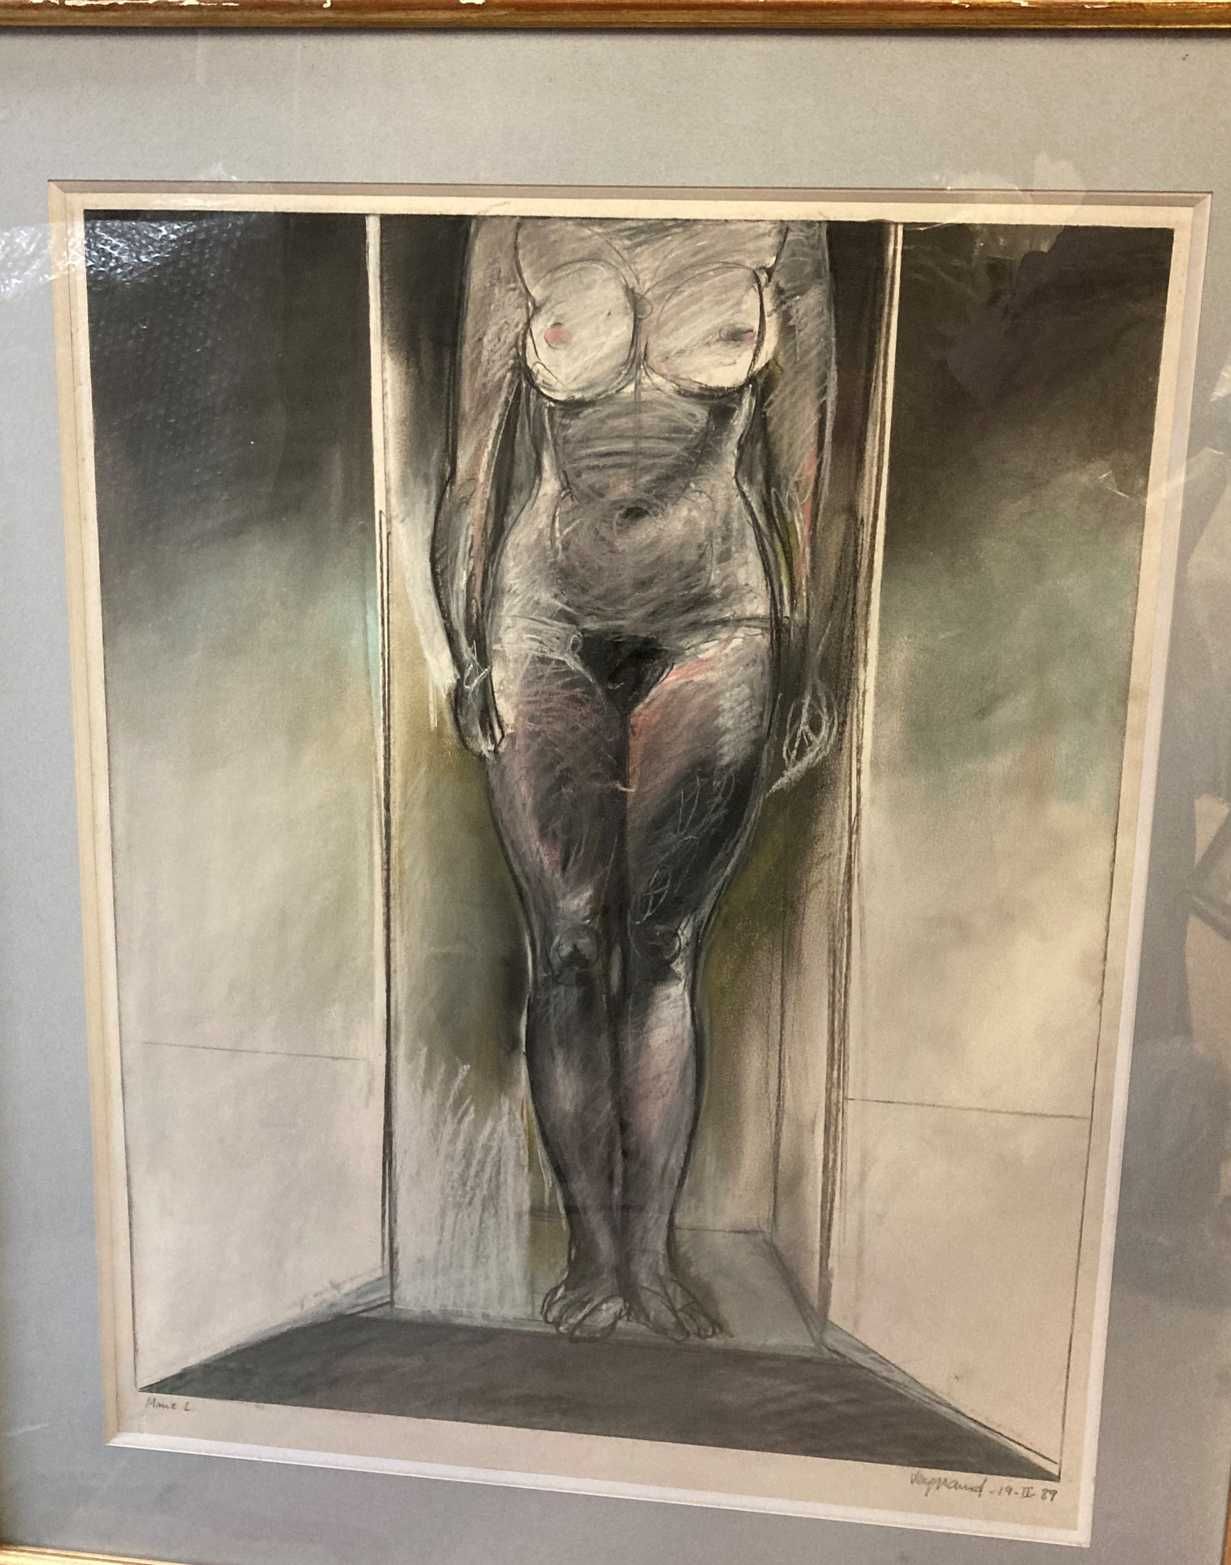 Null Jean-Jacques VERGNAUD (1944)

裸体站立

粉彩画，右下角有签名，日期为19/02/89

64 x 49 厘米